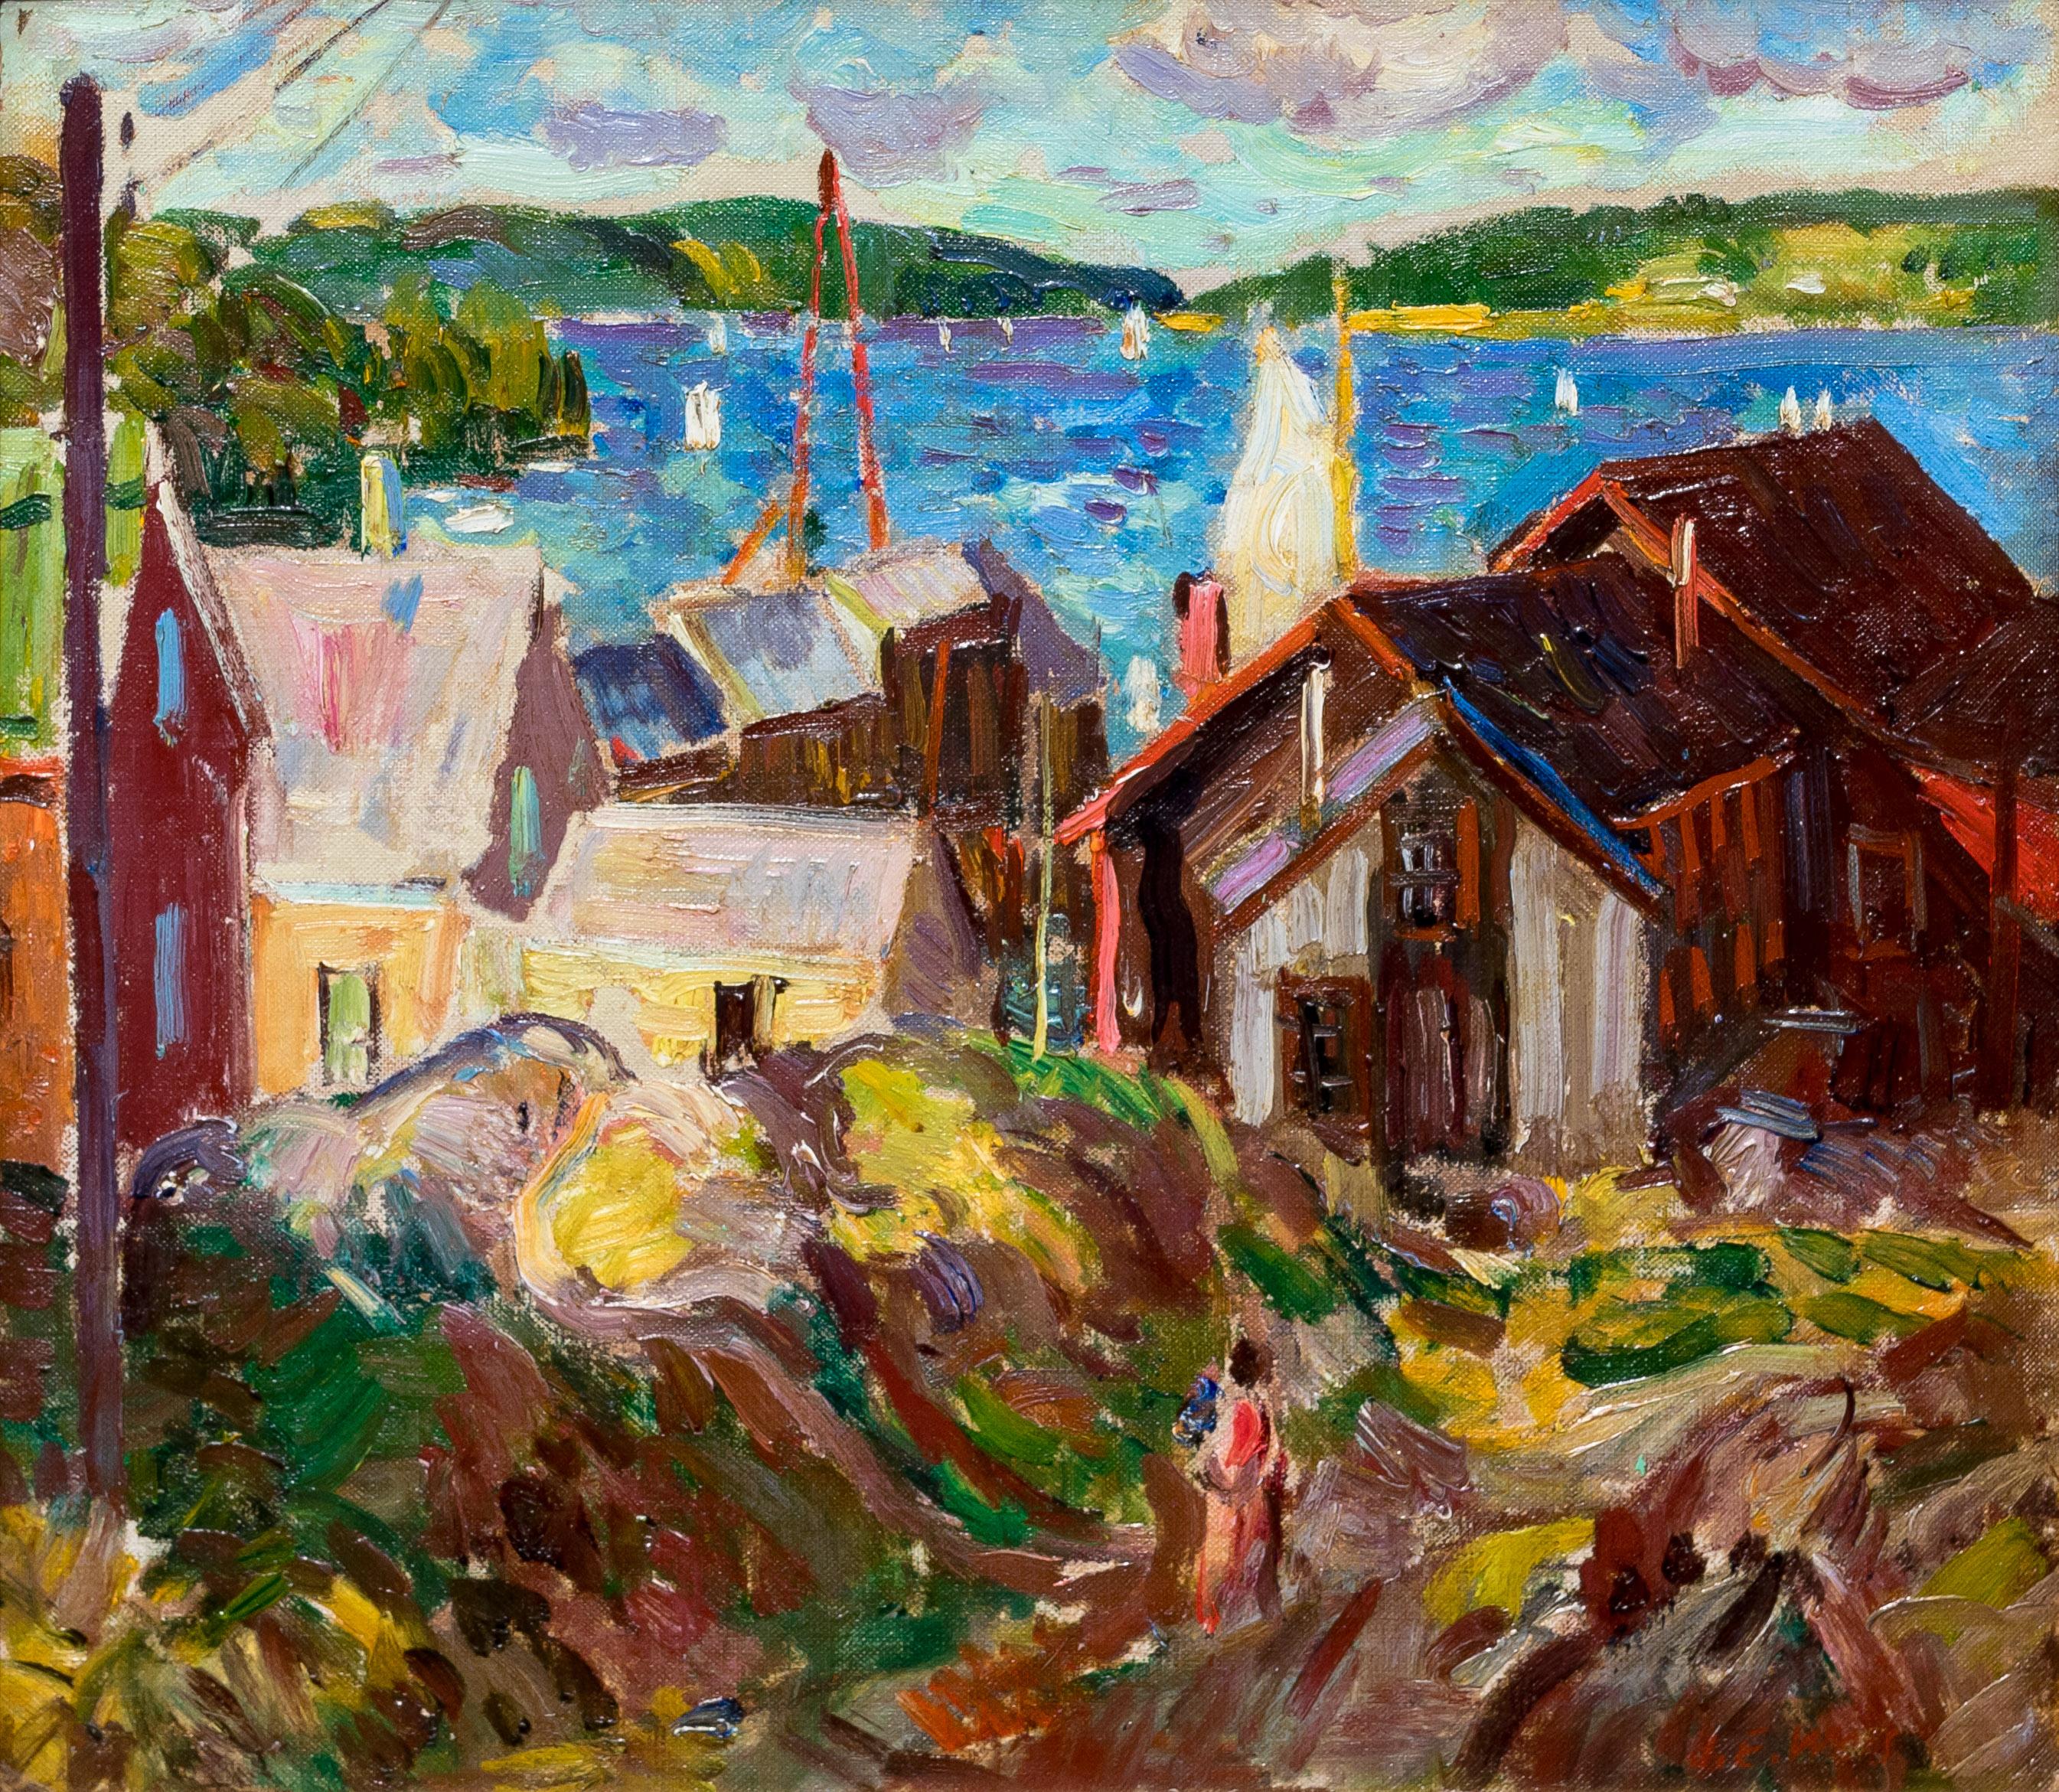 John E. Weis Landscape Painting - American Impressionist Painting, "Rockport", Oil on Board, Fine Gold Leaf Frame